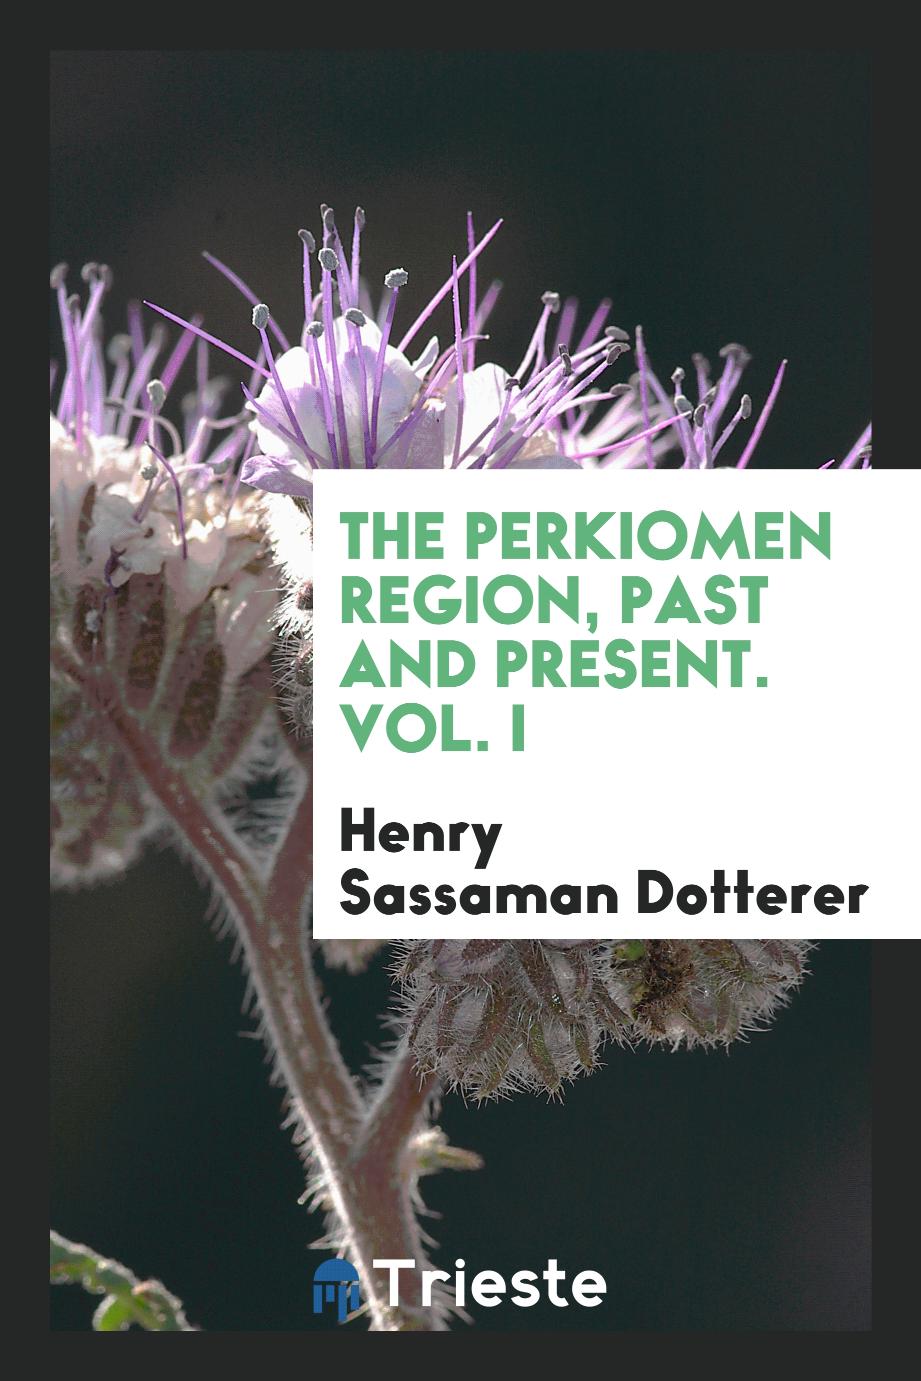 The Perkiomen Region, past and Present. Vol. I